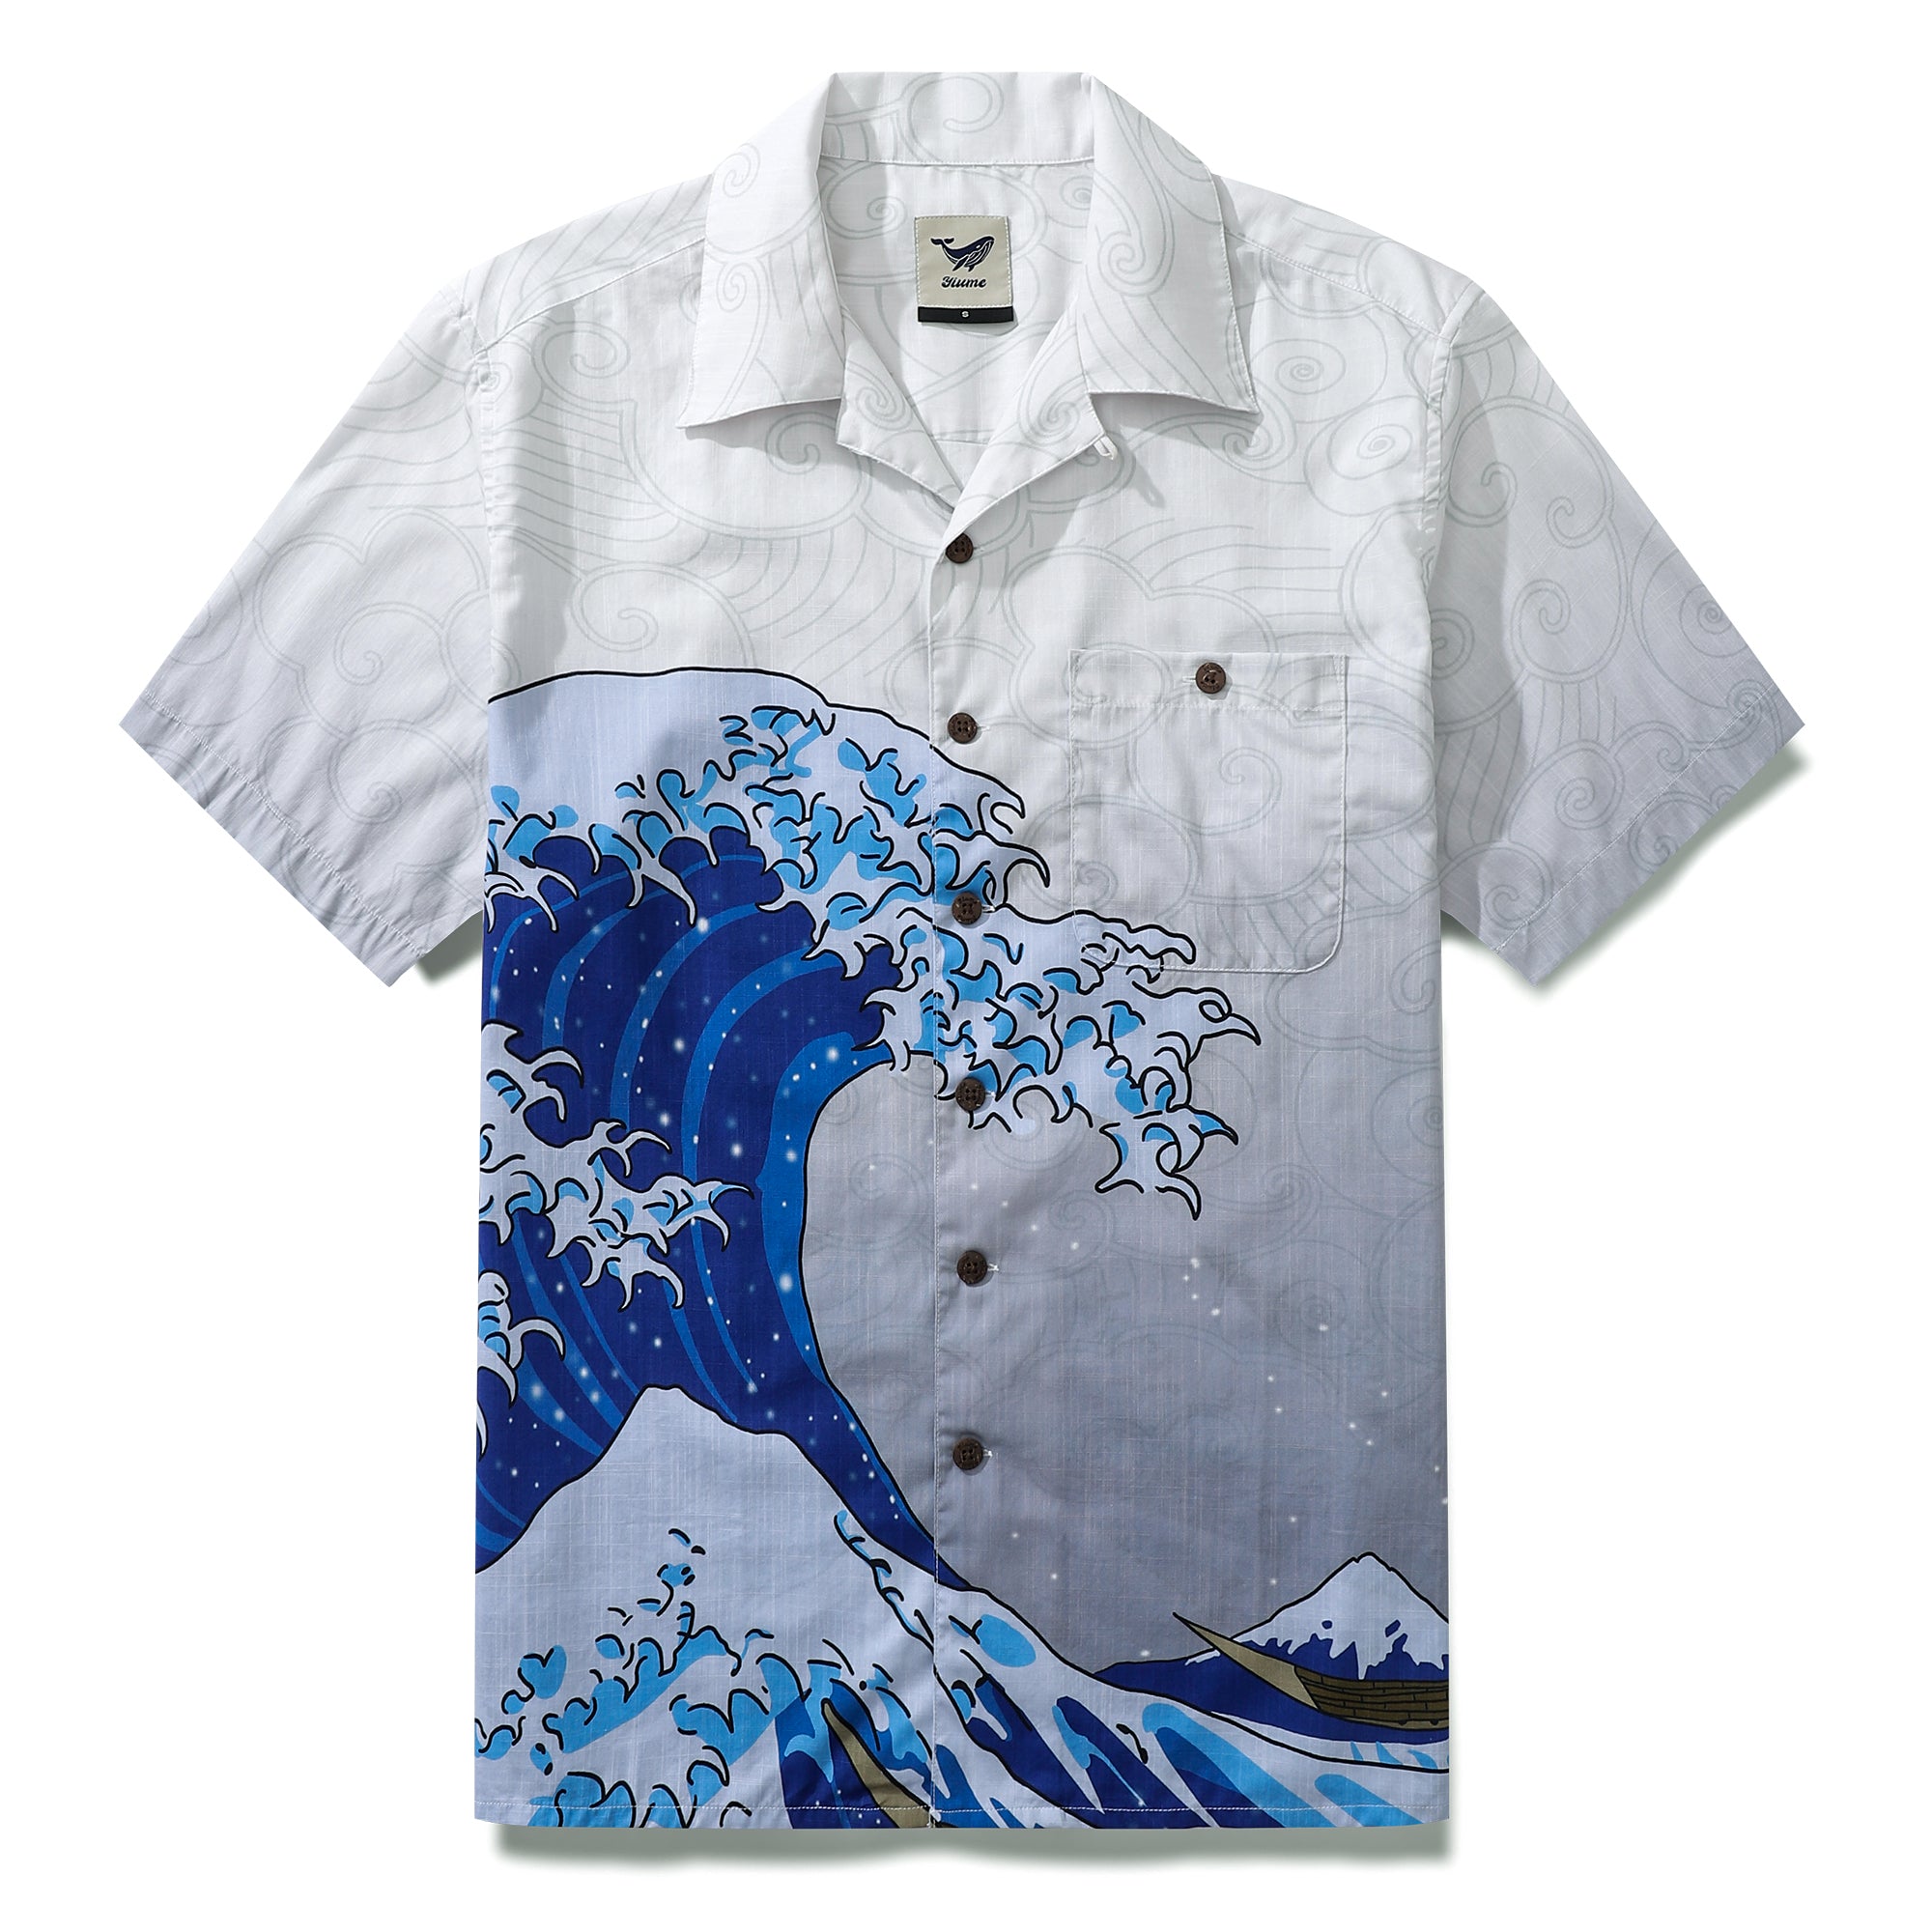 Men's Aloha Shirt Cotton Short Sleeve Waves Pattern Coconut Buttons Camp Shirt S